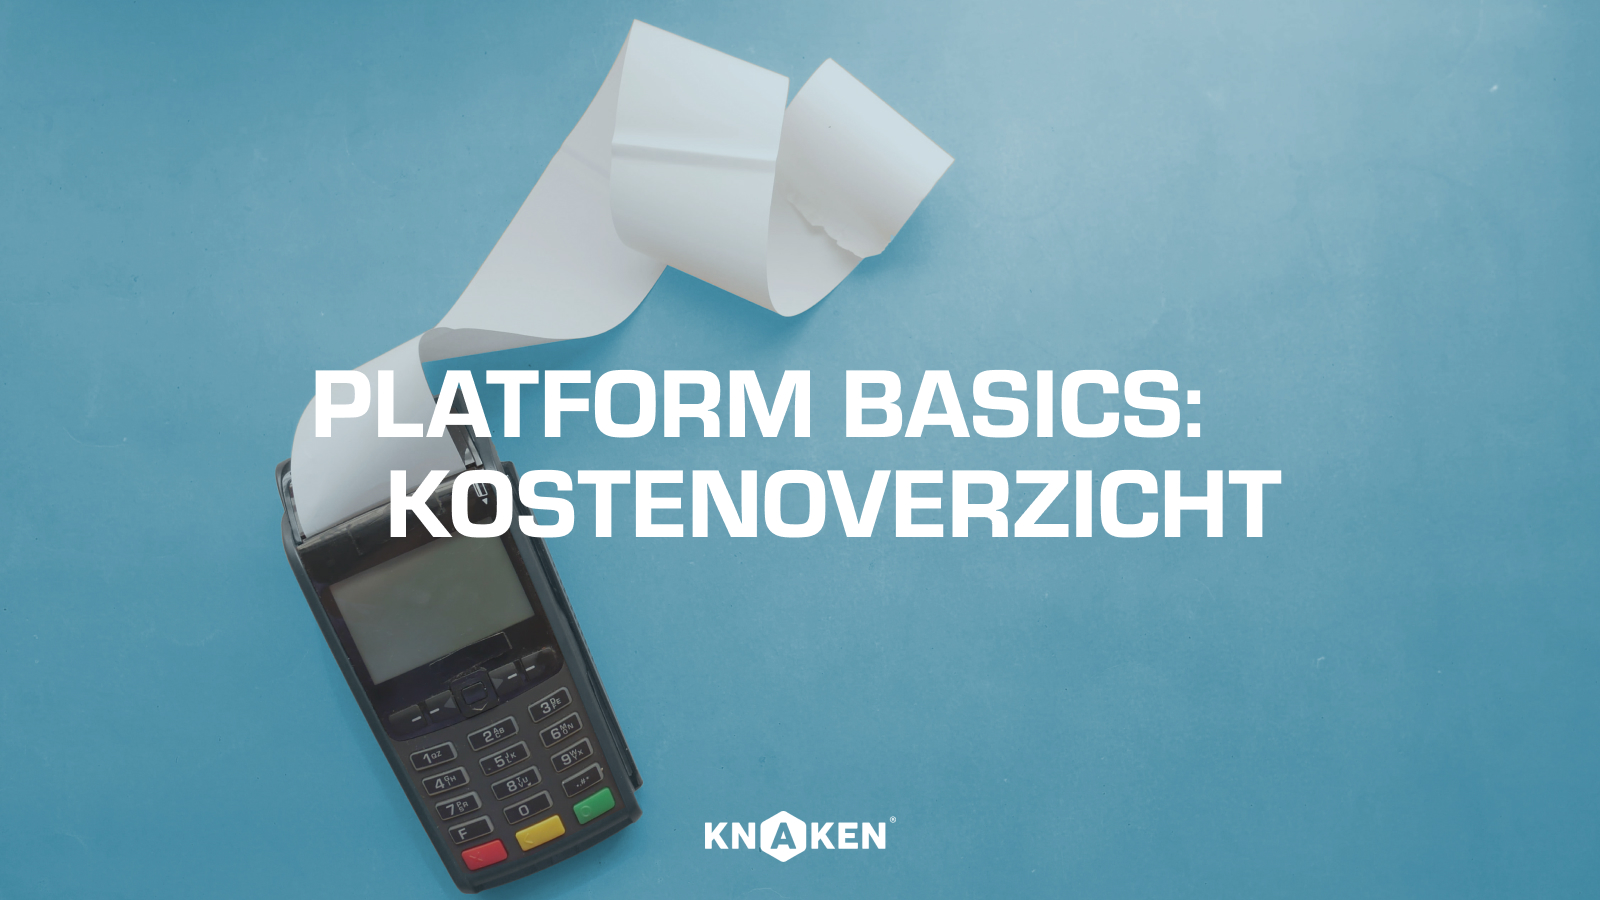 Platform basics: kostenoverzicht